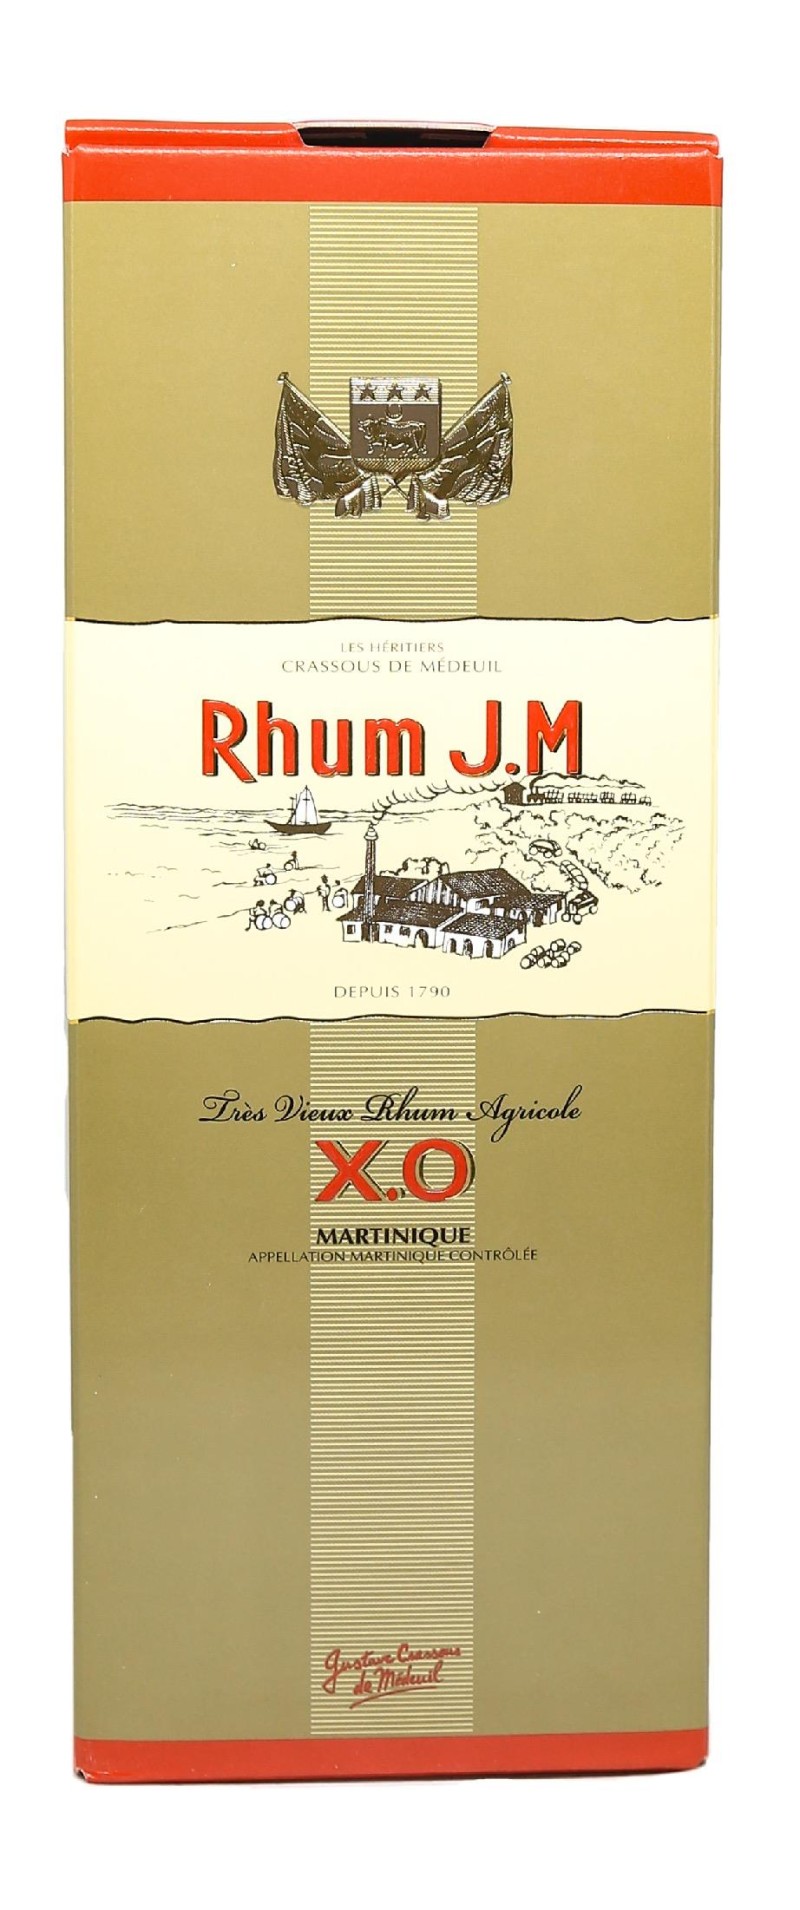 Rhum Agricole XO, Rhum JM (Martinique)